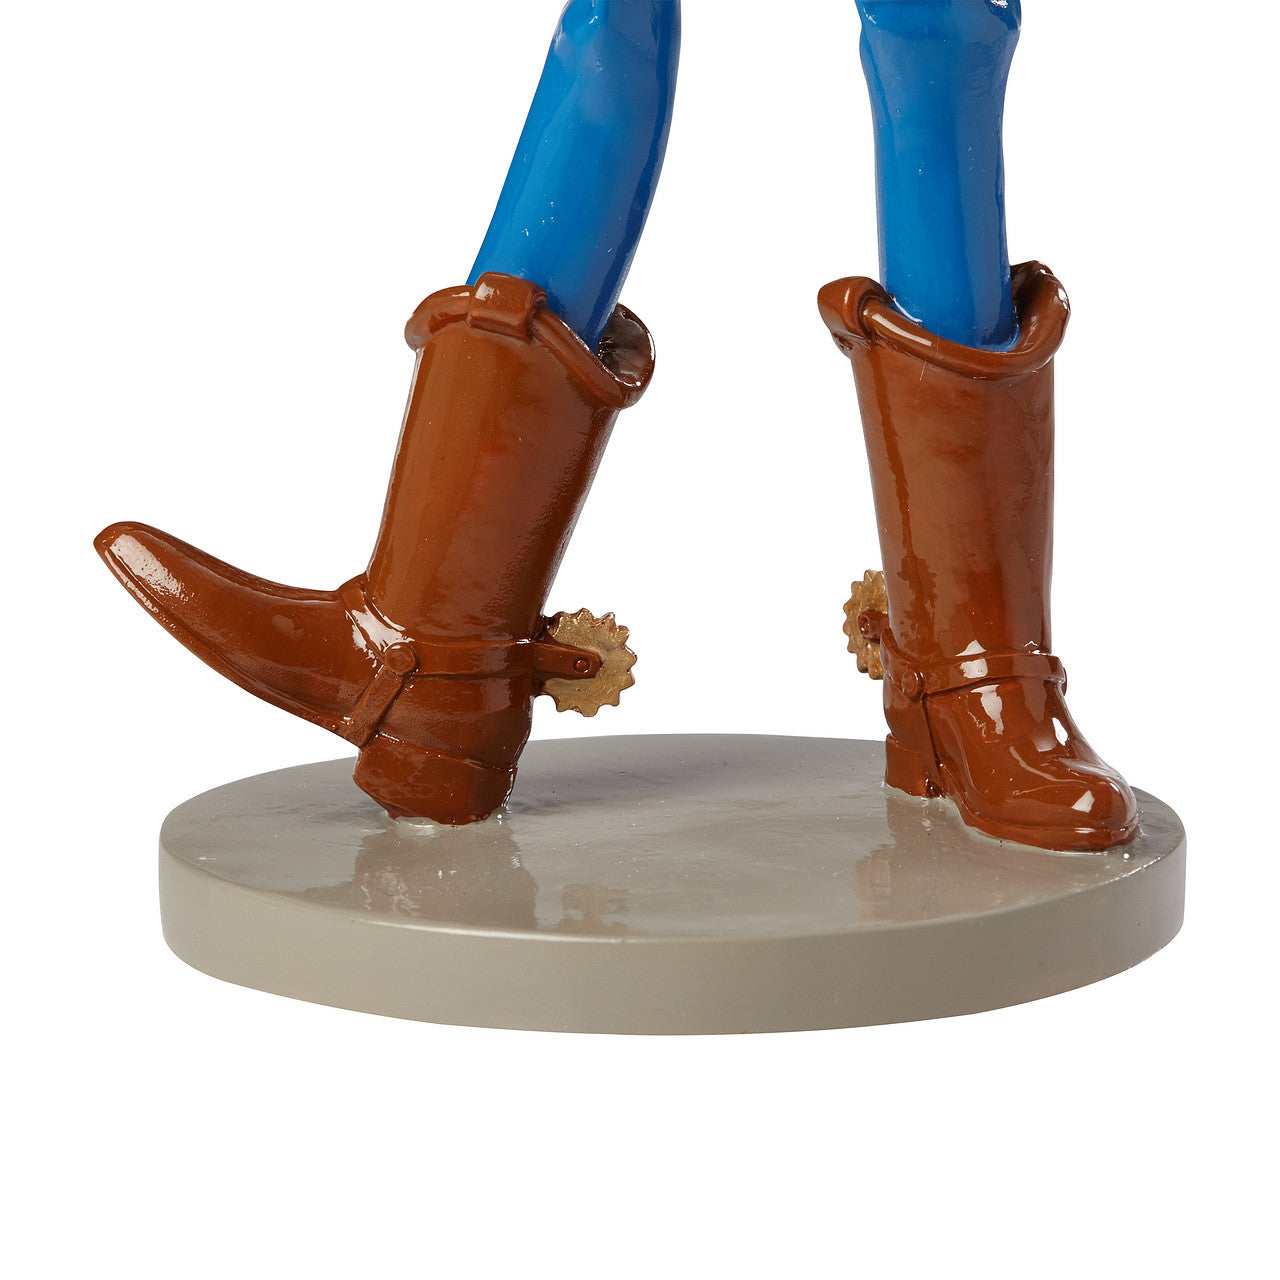 Woody Figurine